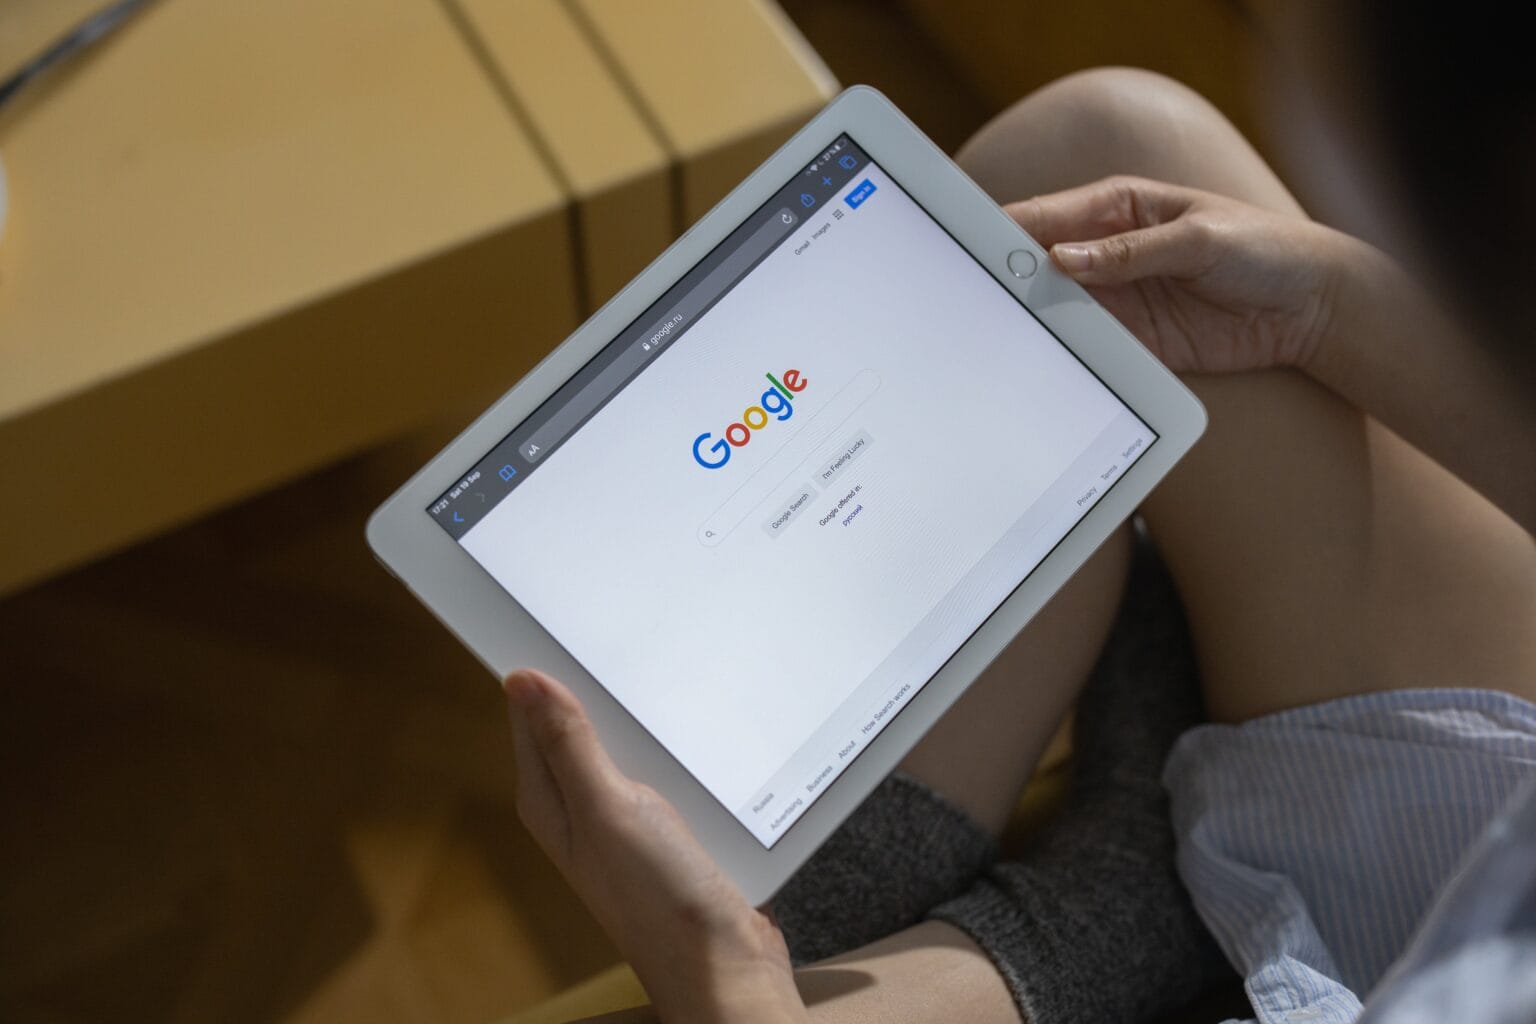 iPad showing google.com